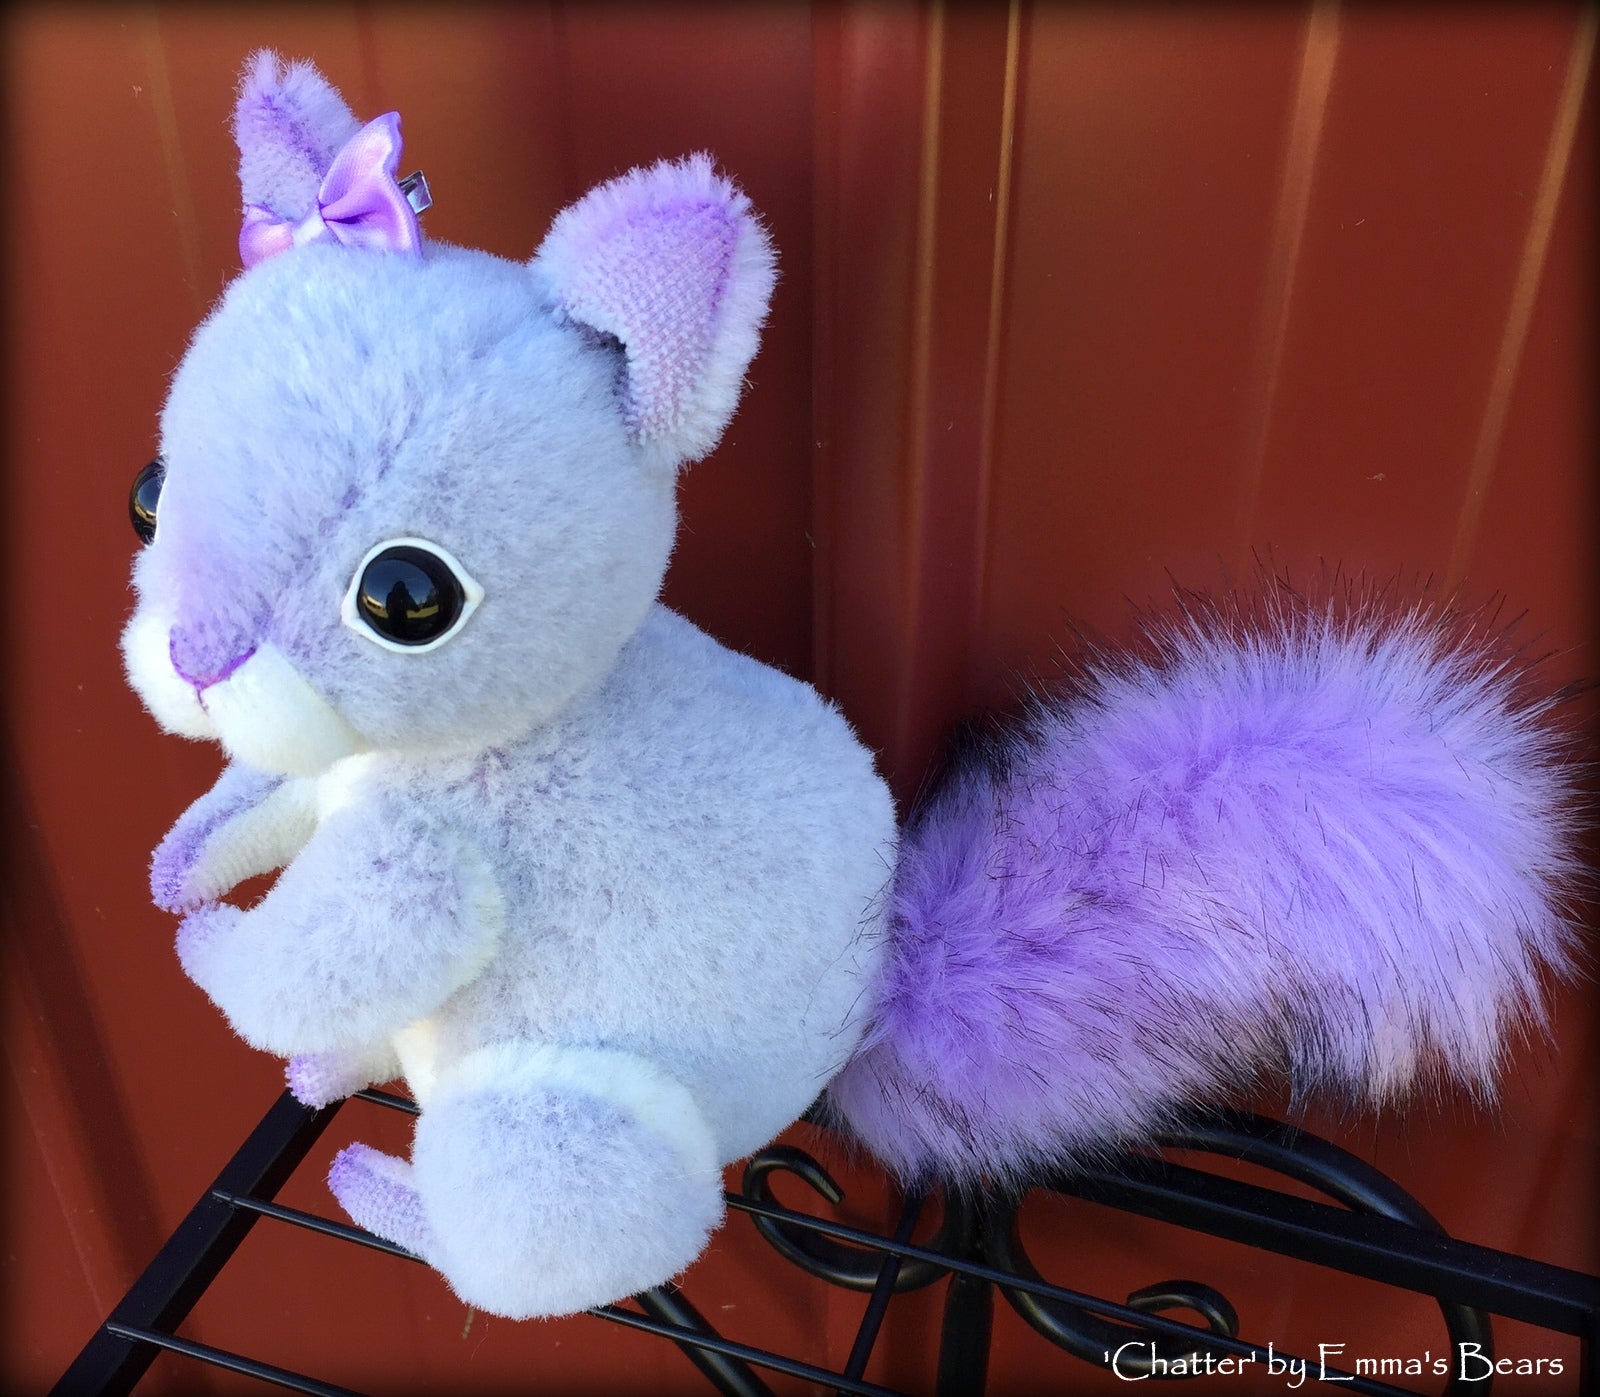 Chatter - 6in Hand-dyed alpaca Artist Squirrel by Emmas Bears - OOAK